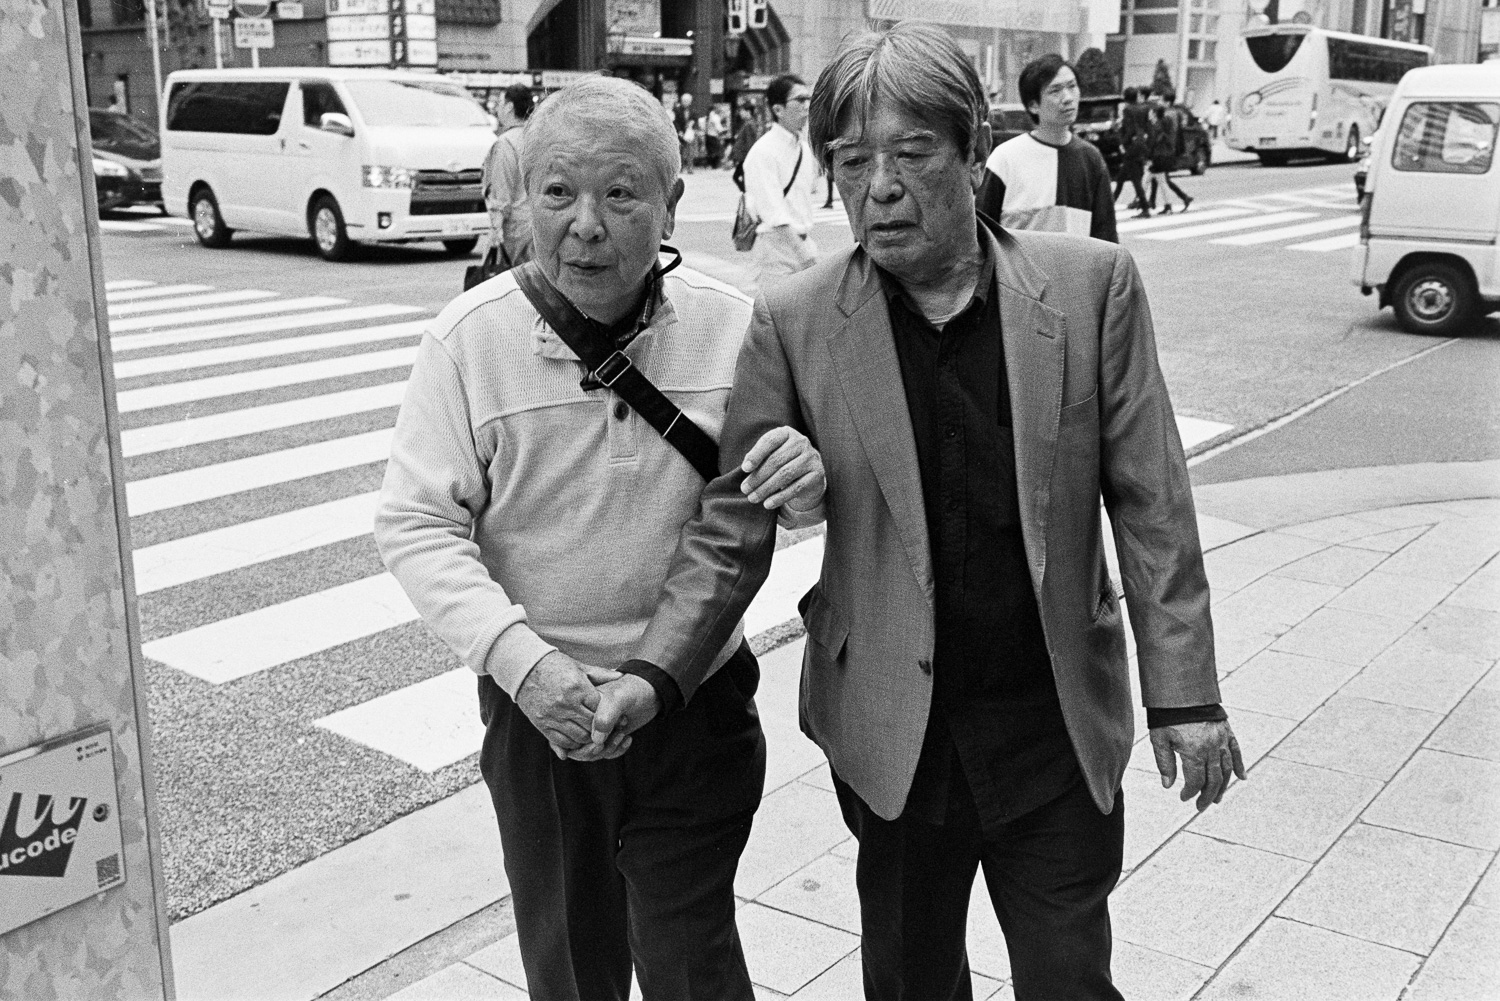 20170419 - Roll 131 - 031-Nick-Bedford,-Photographer-Black and White, Film, Ginza, Japan, Kodak Tri-X 400, Leica M7, Rodinal, Street Photography, Tokyo, Voigtlander 35mm F1.7 Ultron Asph.jpg